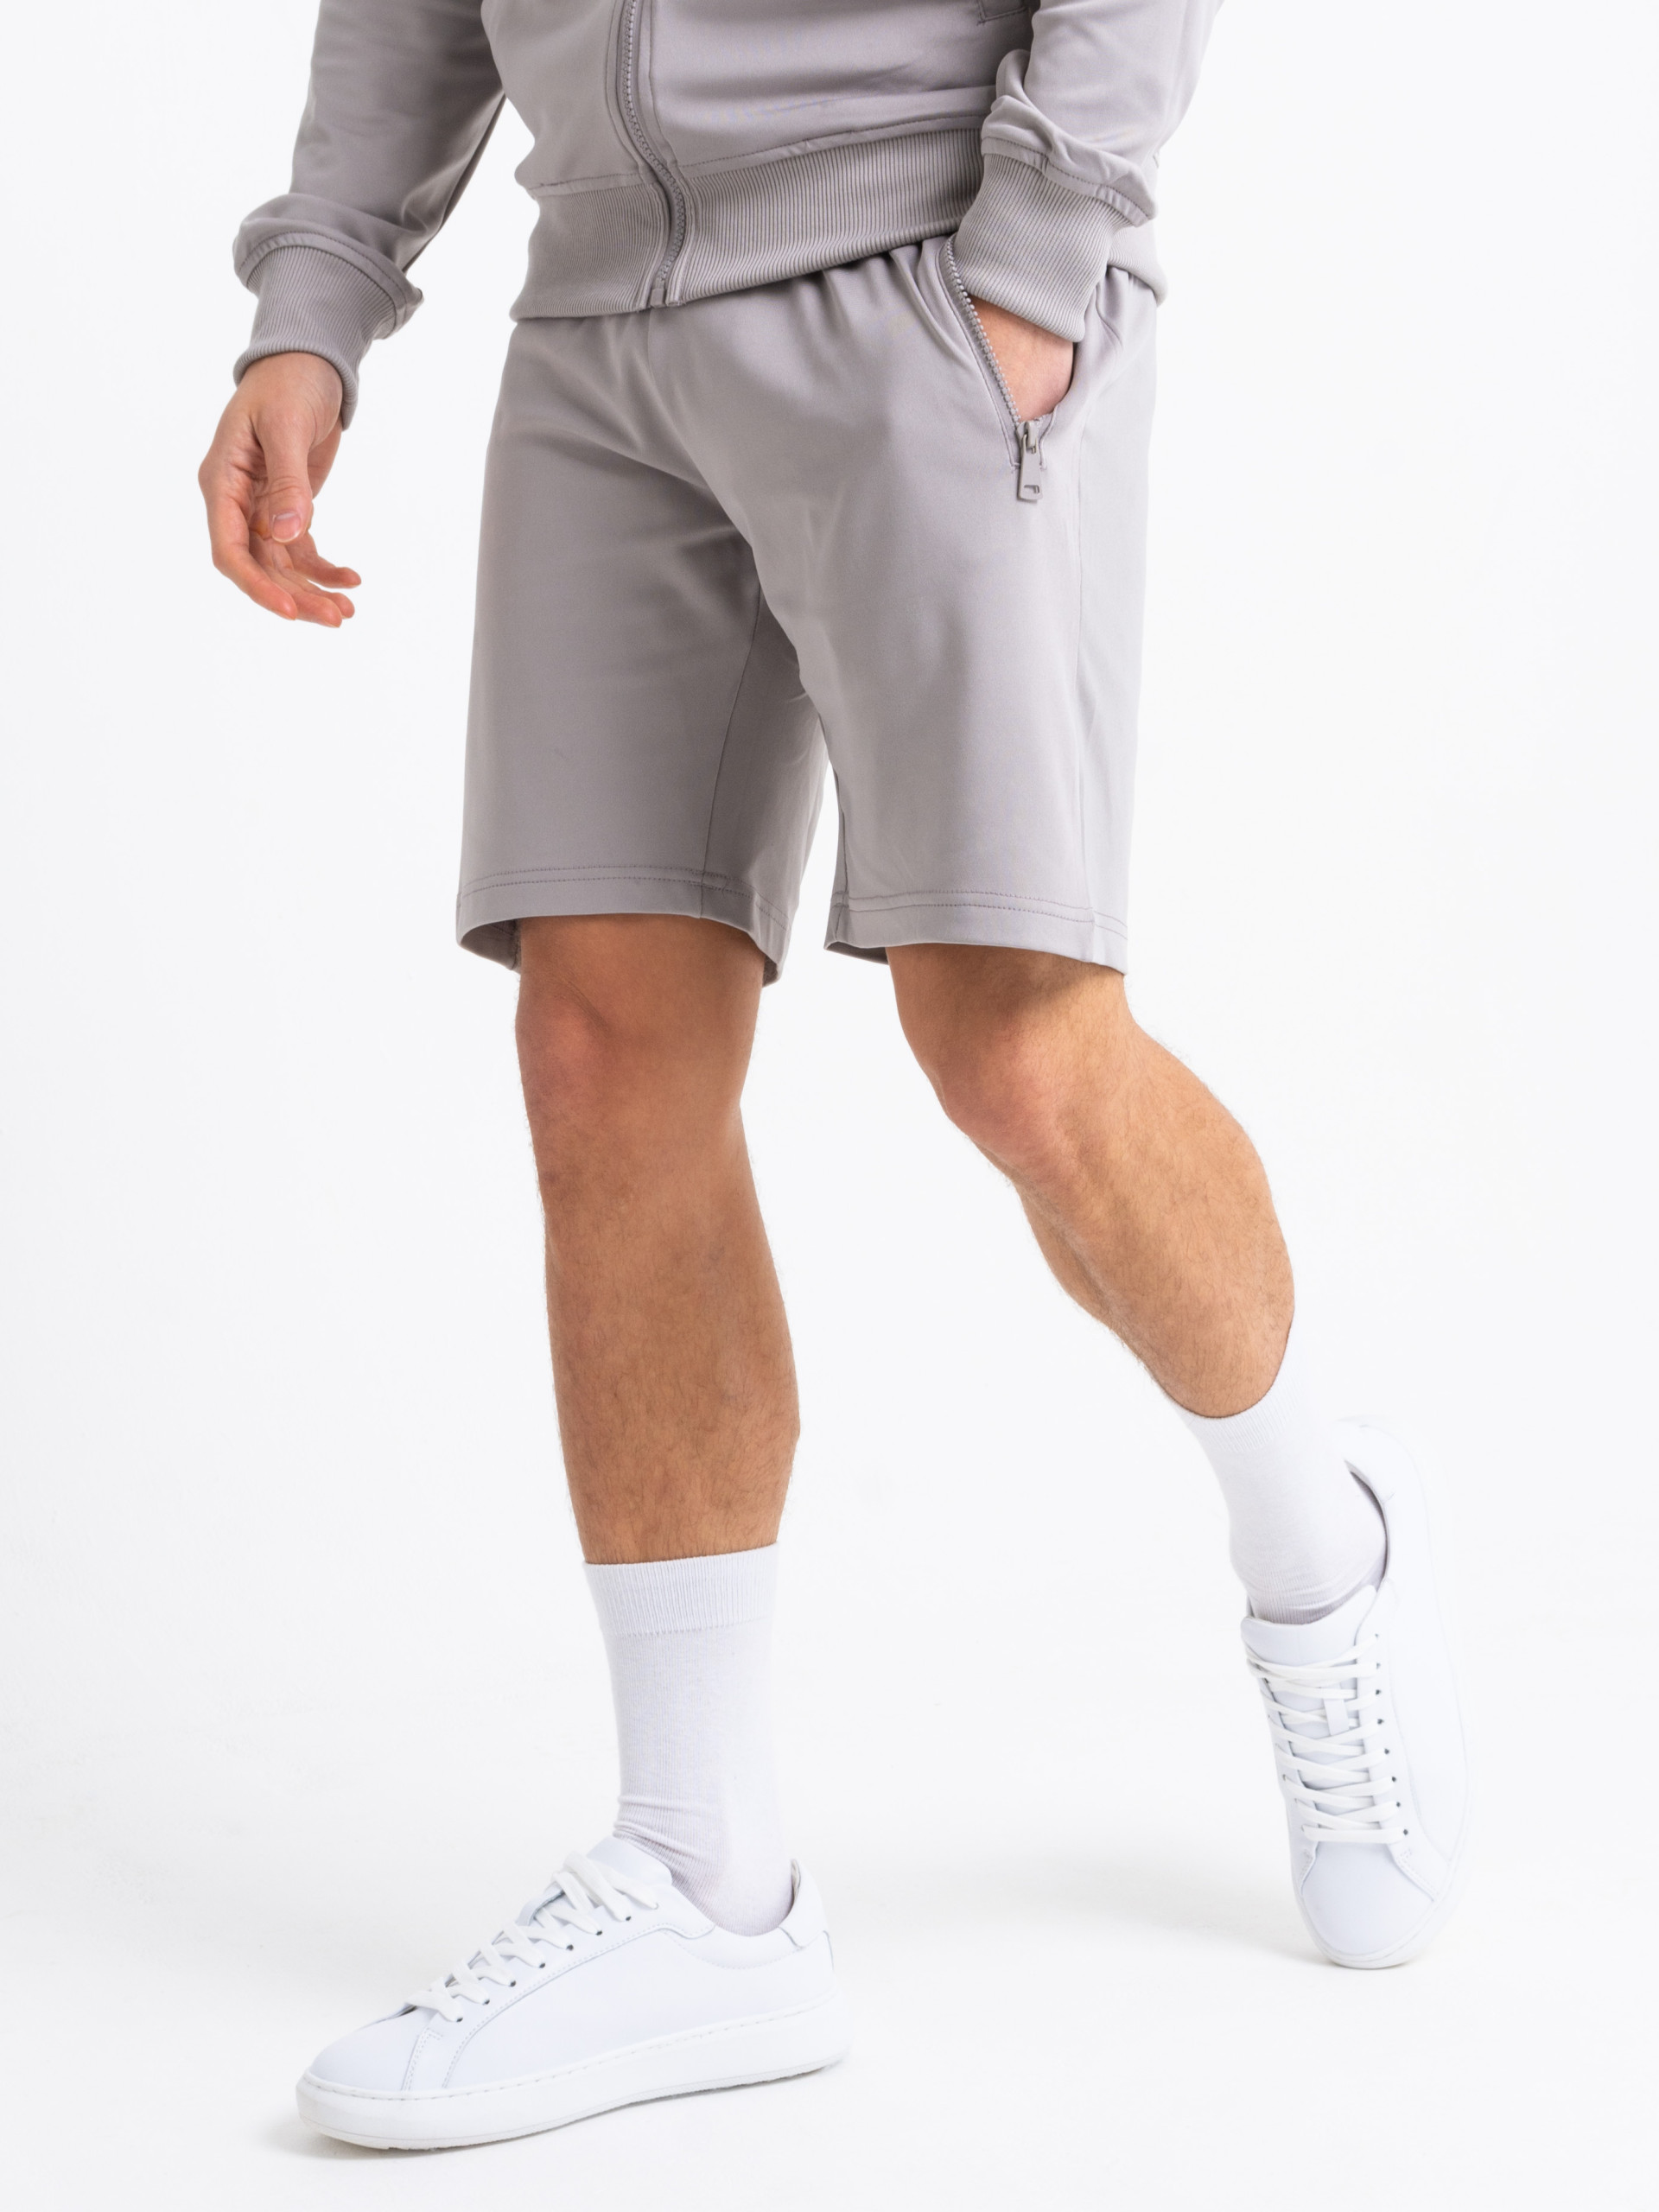 ASOS DESIGN oversized jersey shorts in gray marl